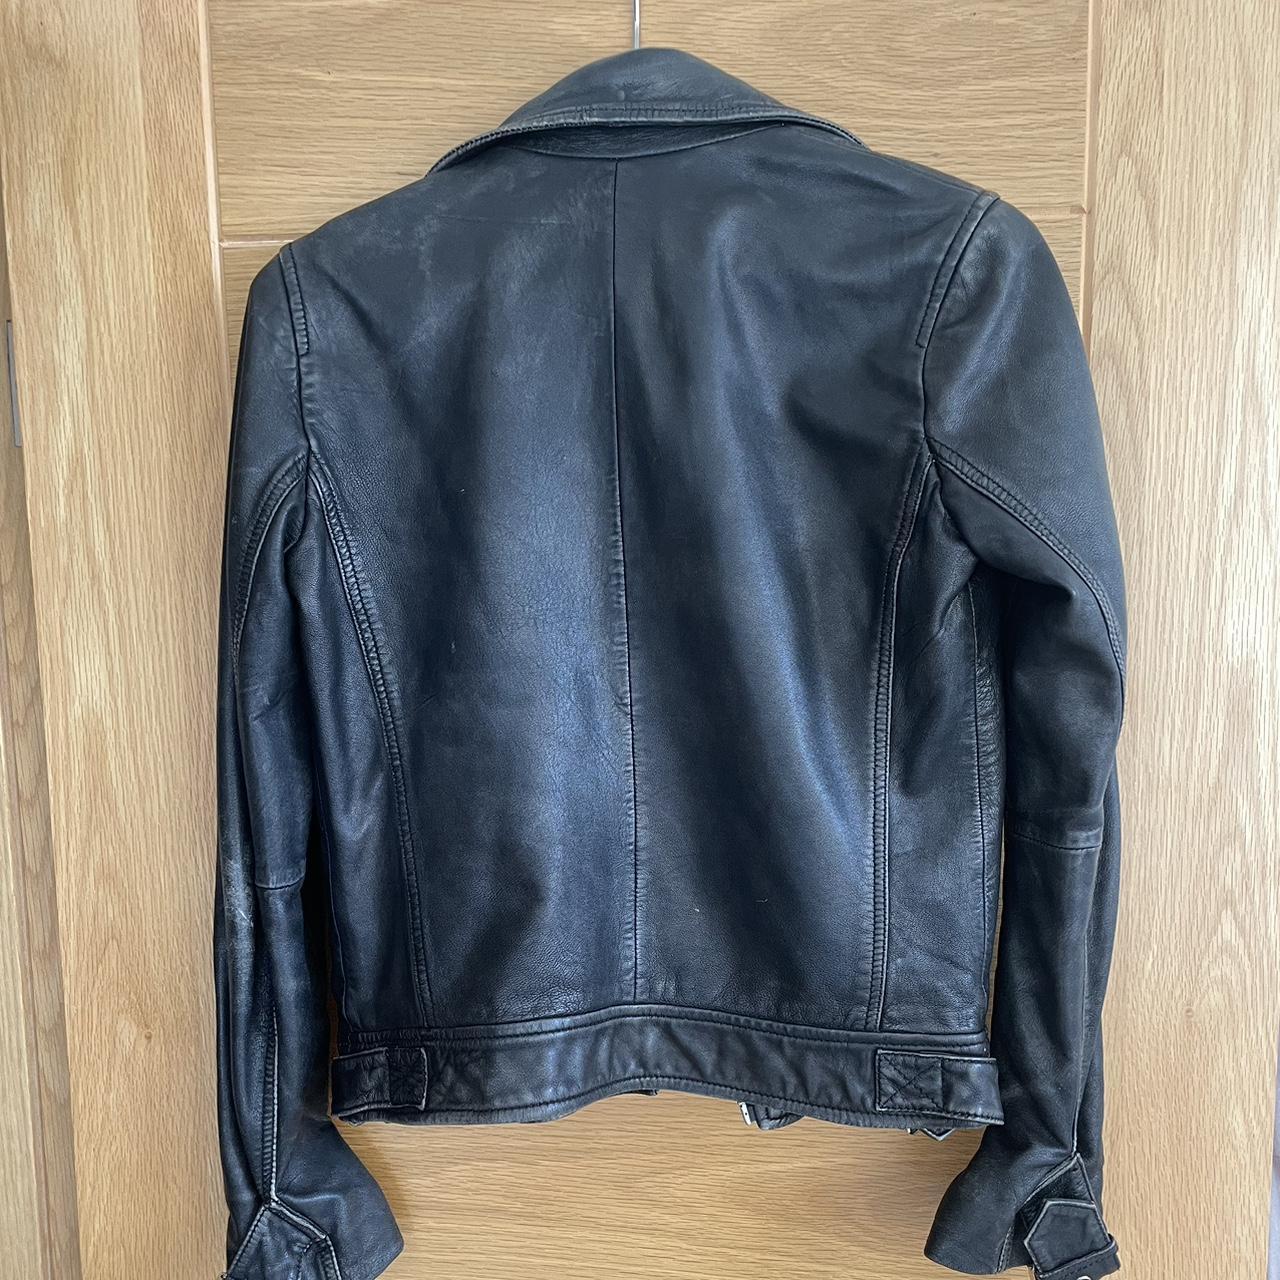 Topshop Real Leather Biker Jacket, Distressed Look,... - Depop